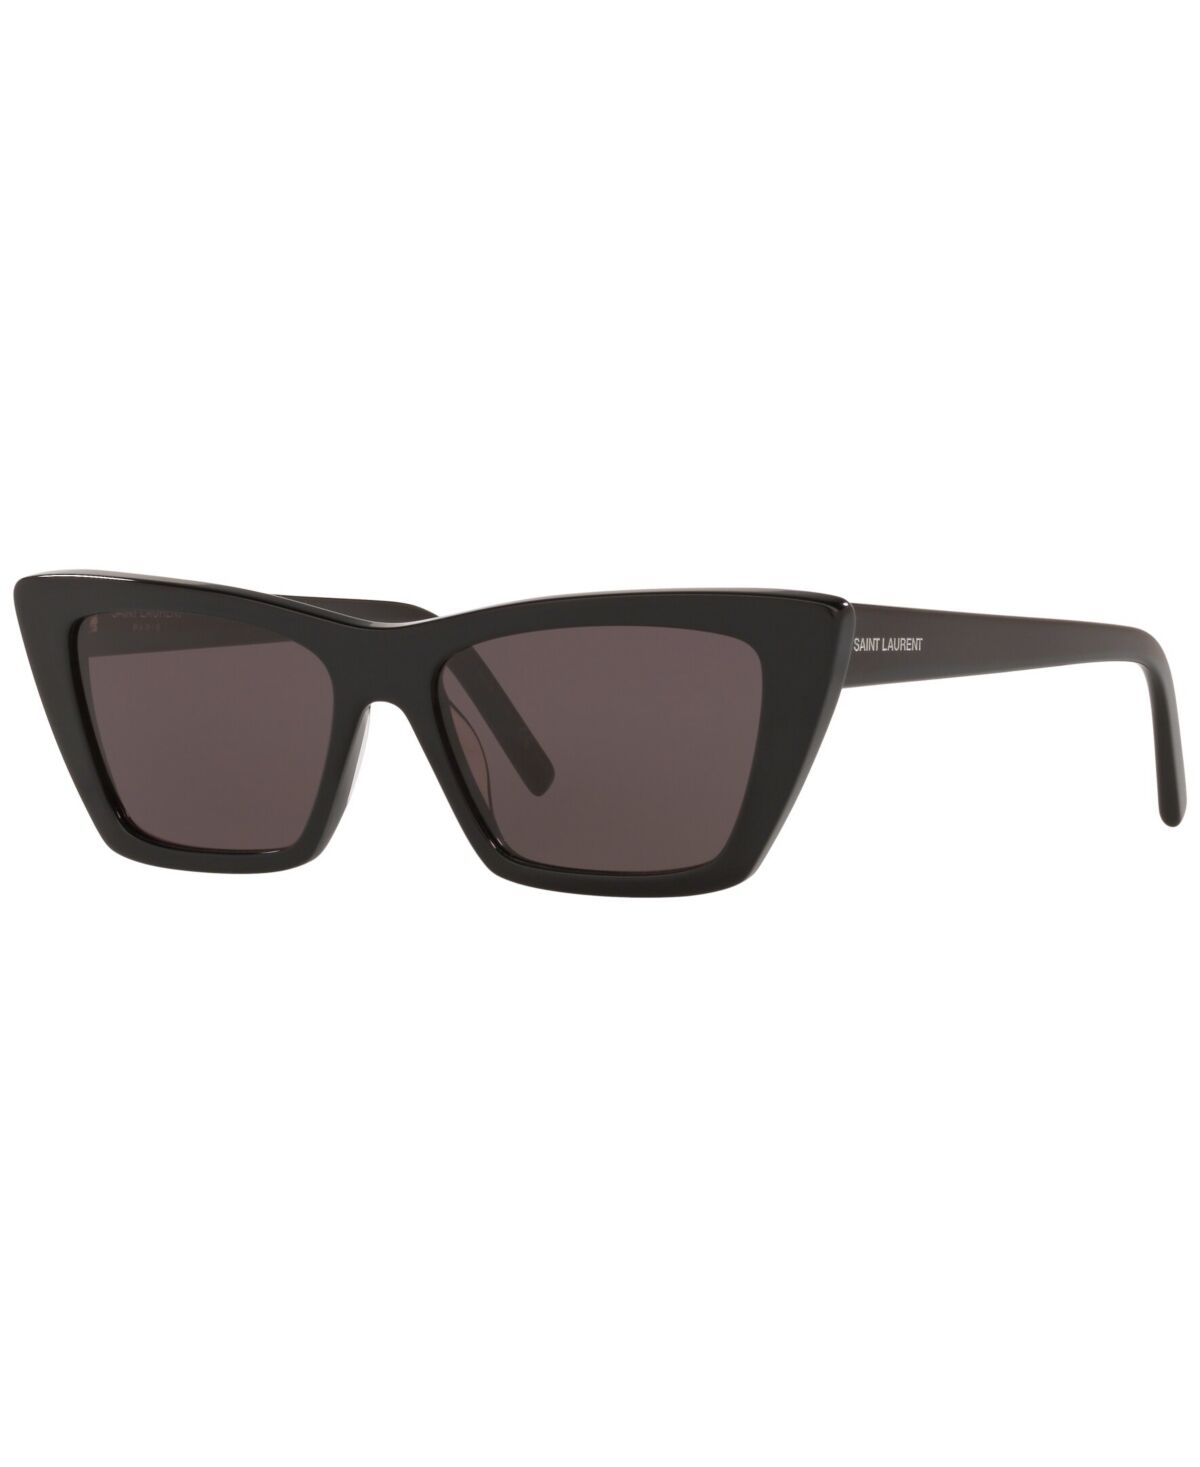 Saint Laurent Women's Sunglasses, Sl 276 Mica - Black Shiny